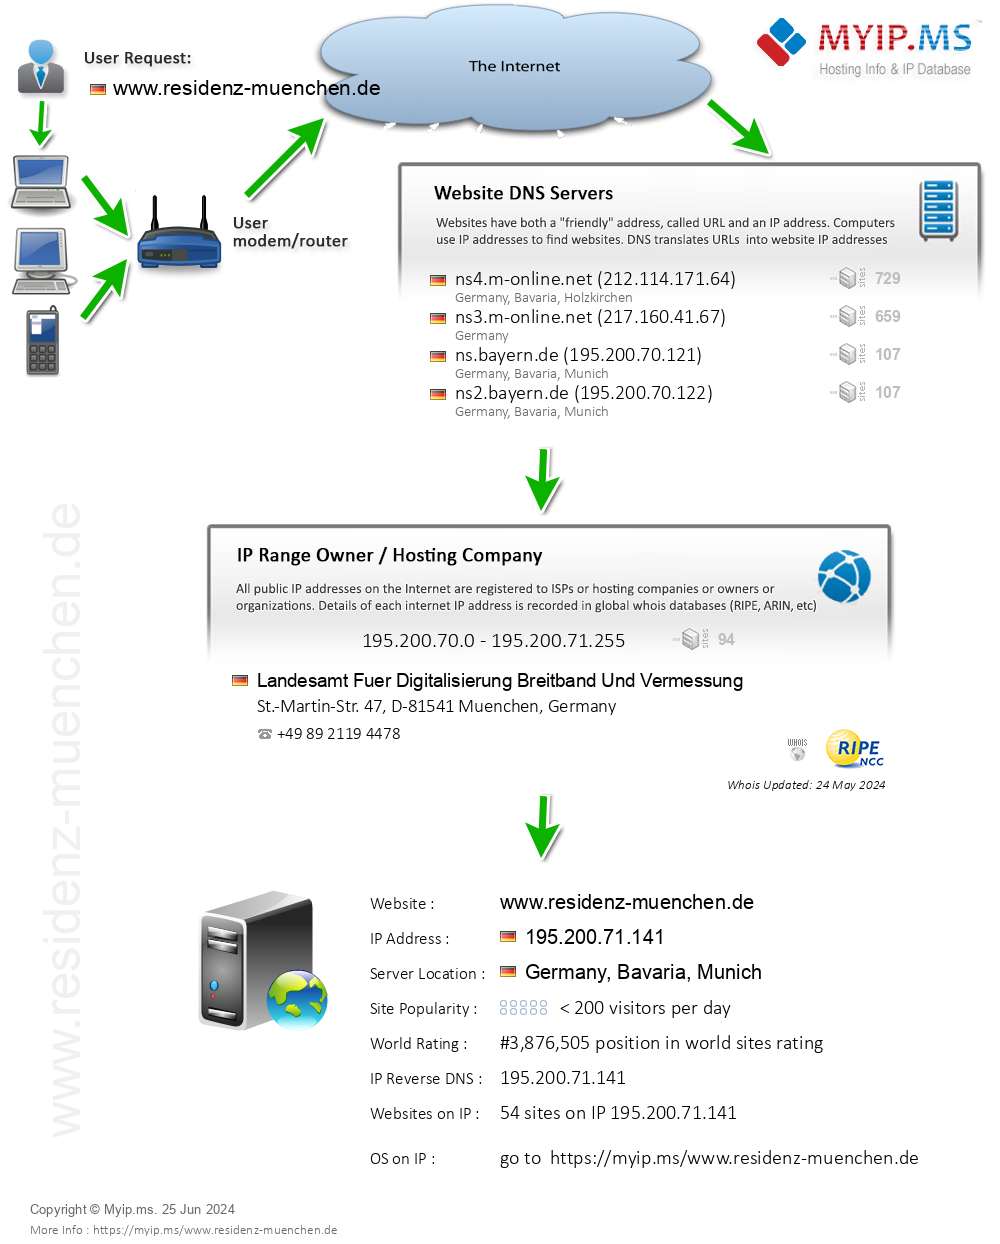 Residenz-muenchen.de - Website Hosting Visual IP Diagram